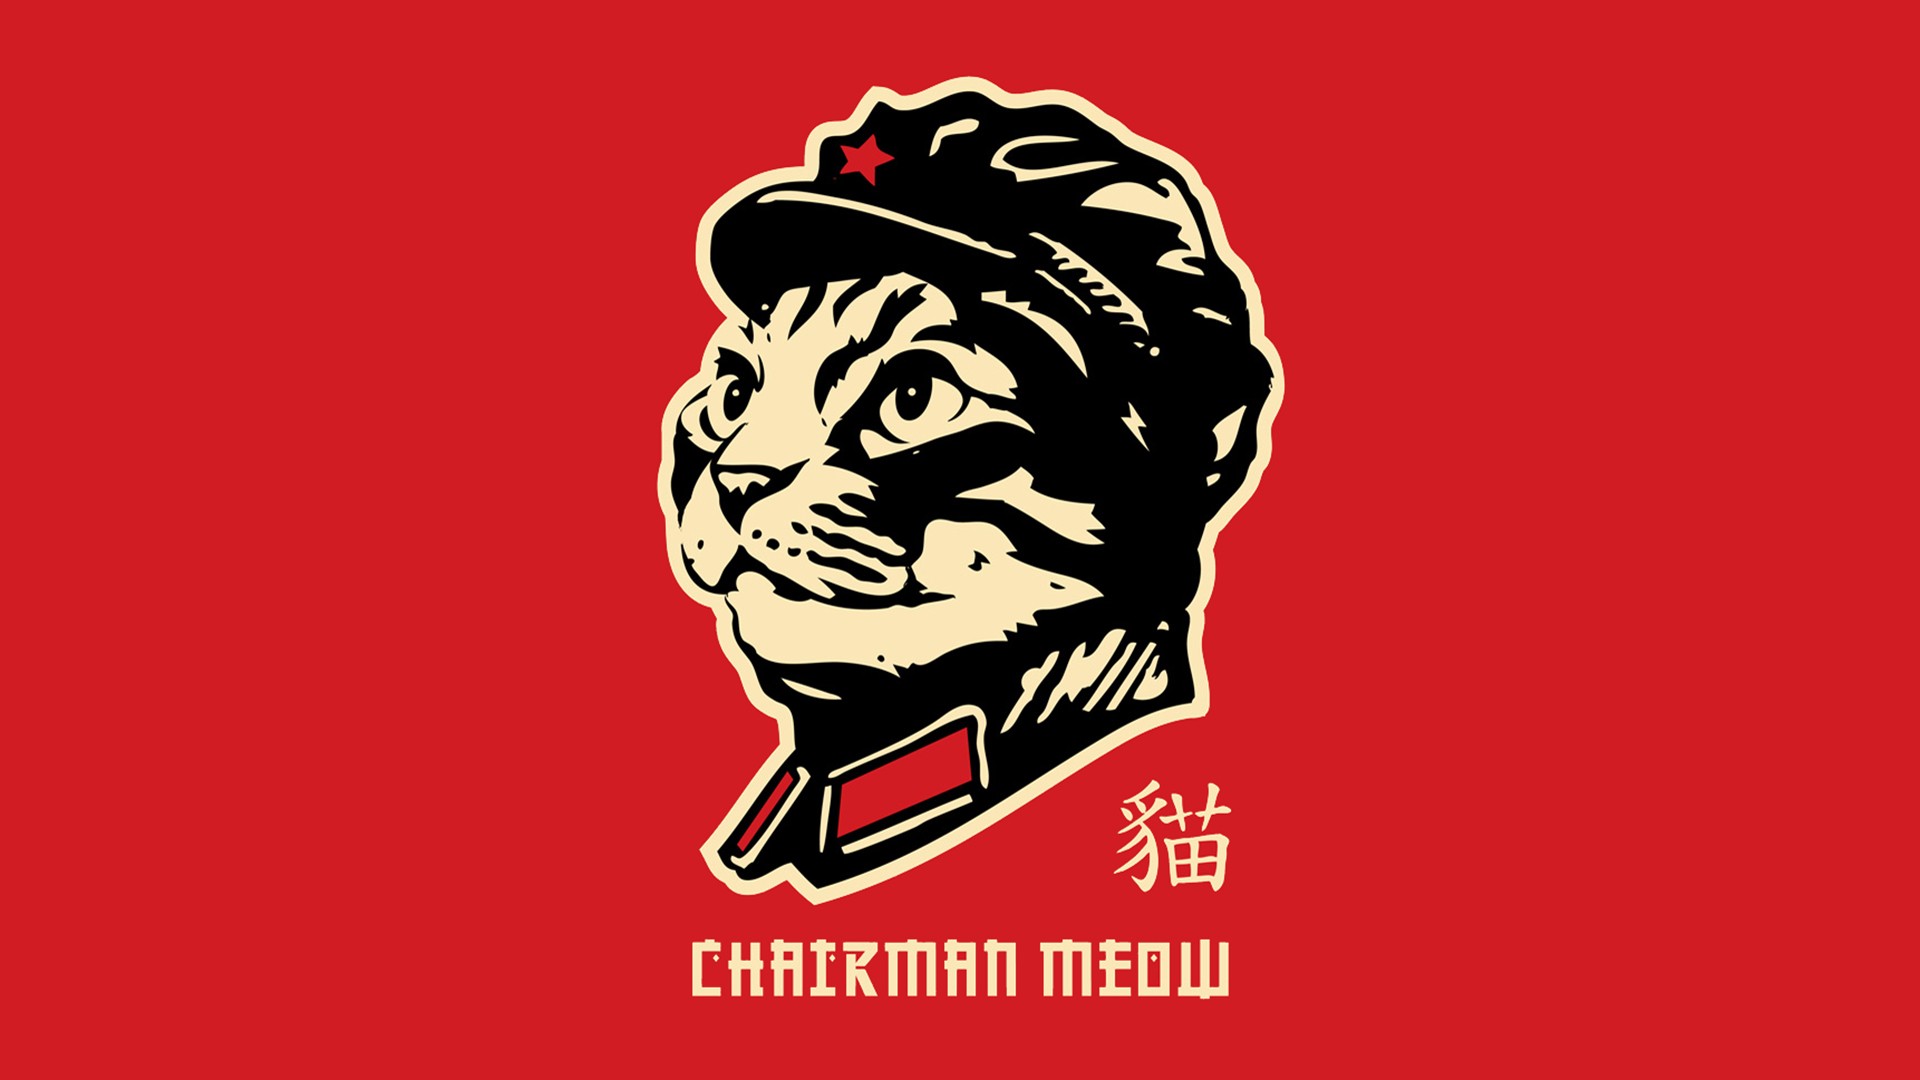 General 1920x1080 cats minimalism humor parody red background simple background artwork communism